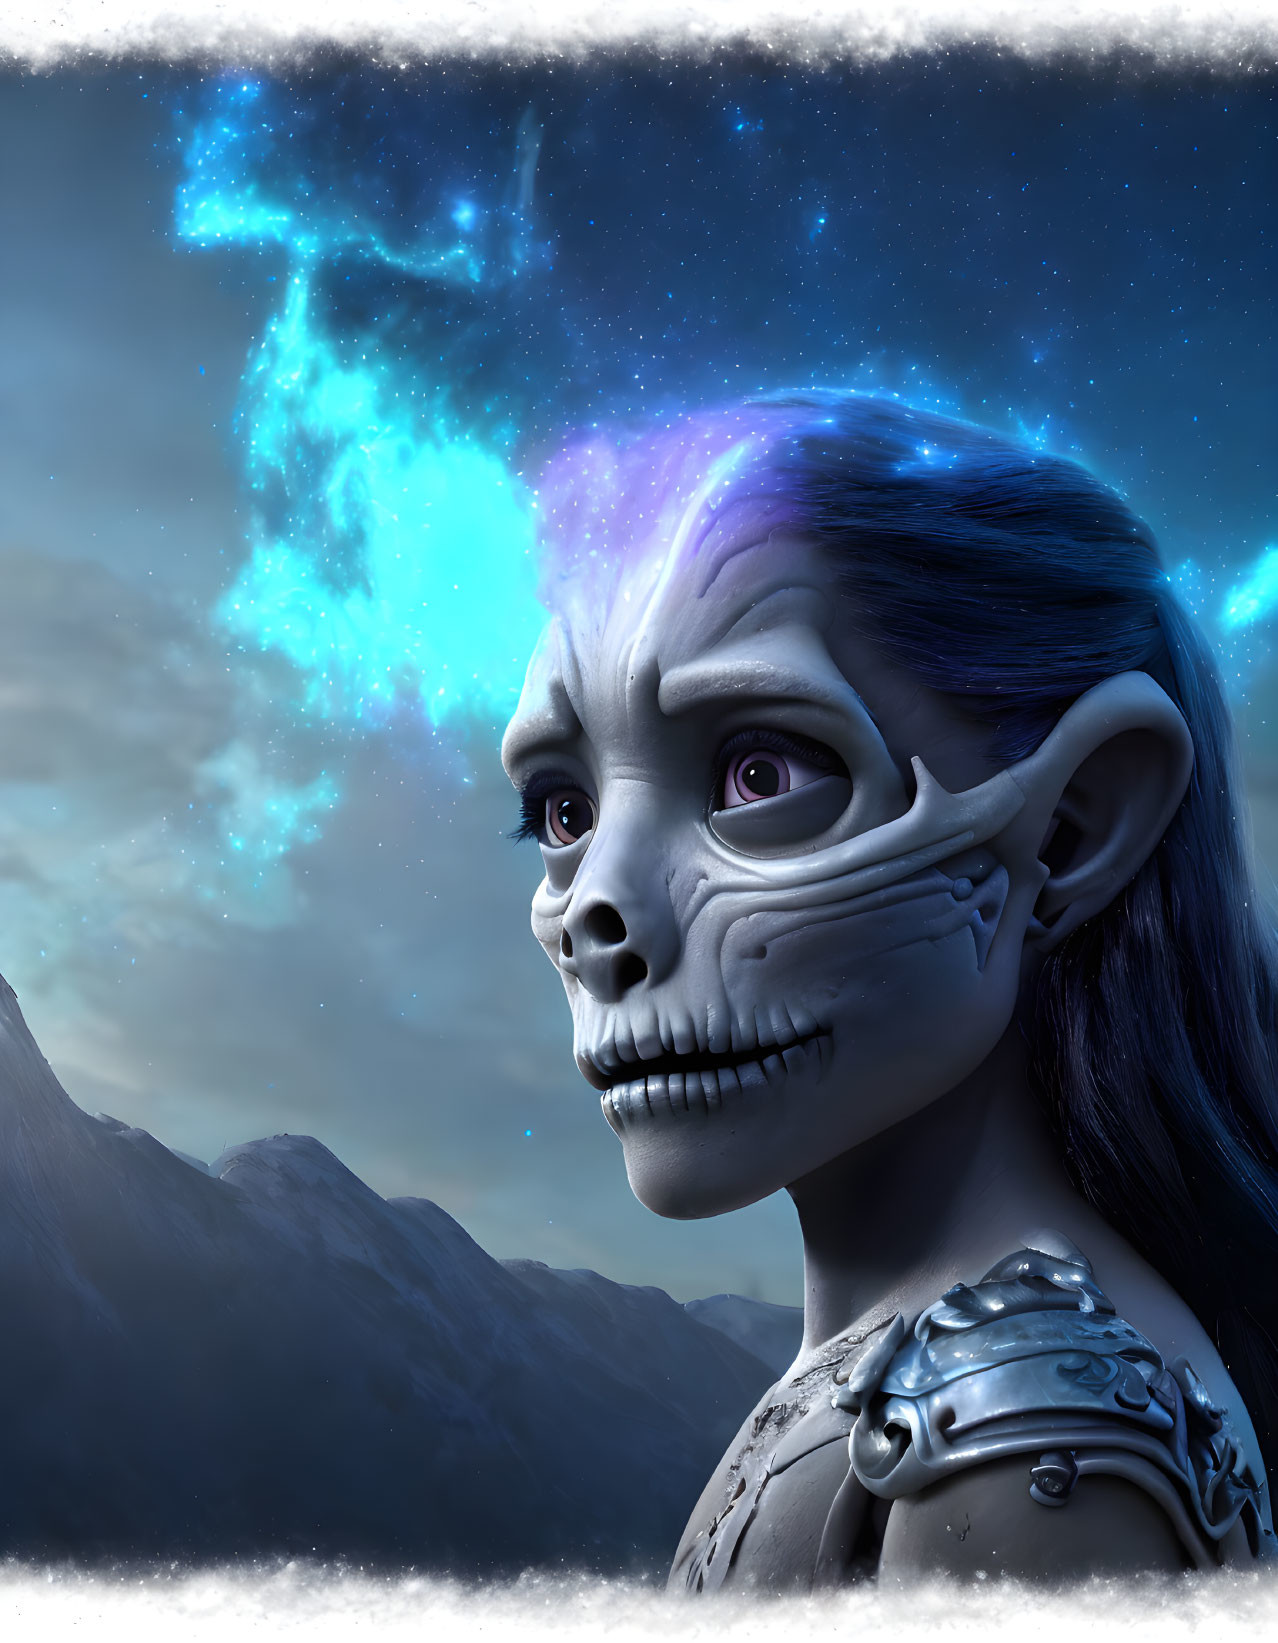 Fantasy portrait of female character with half-living, half-skeletal face under starry sky